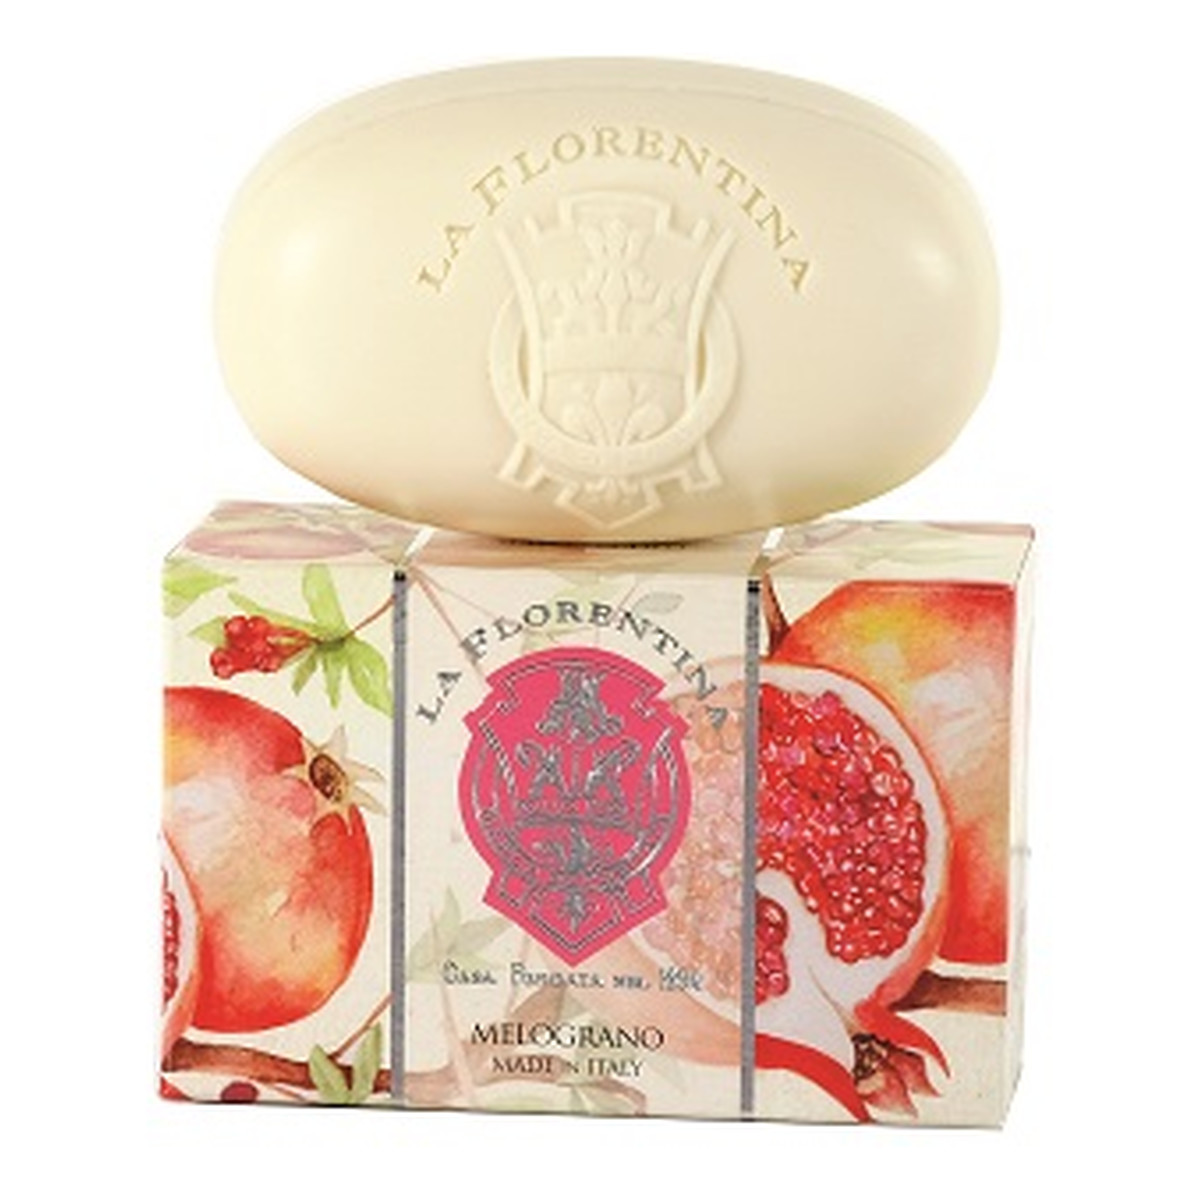 La Florentina Bath Soap mydło do kąpieli Pomegranate 300g